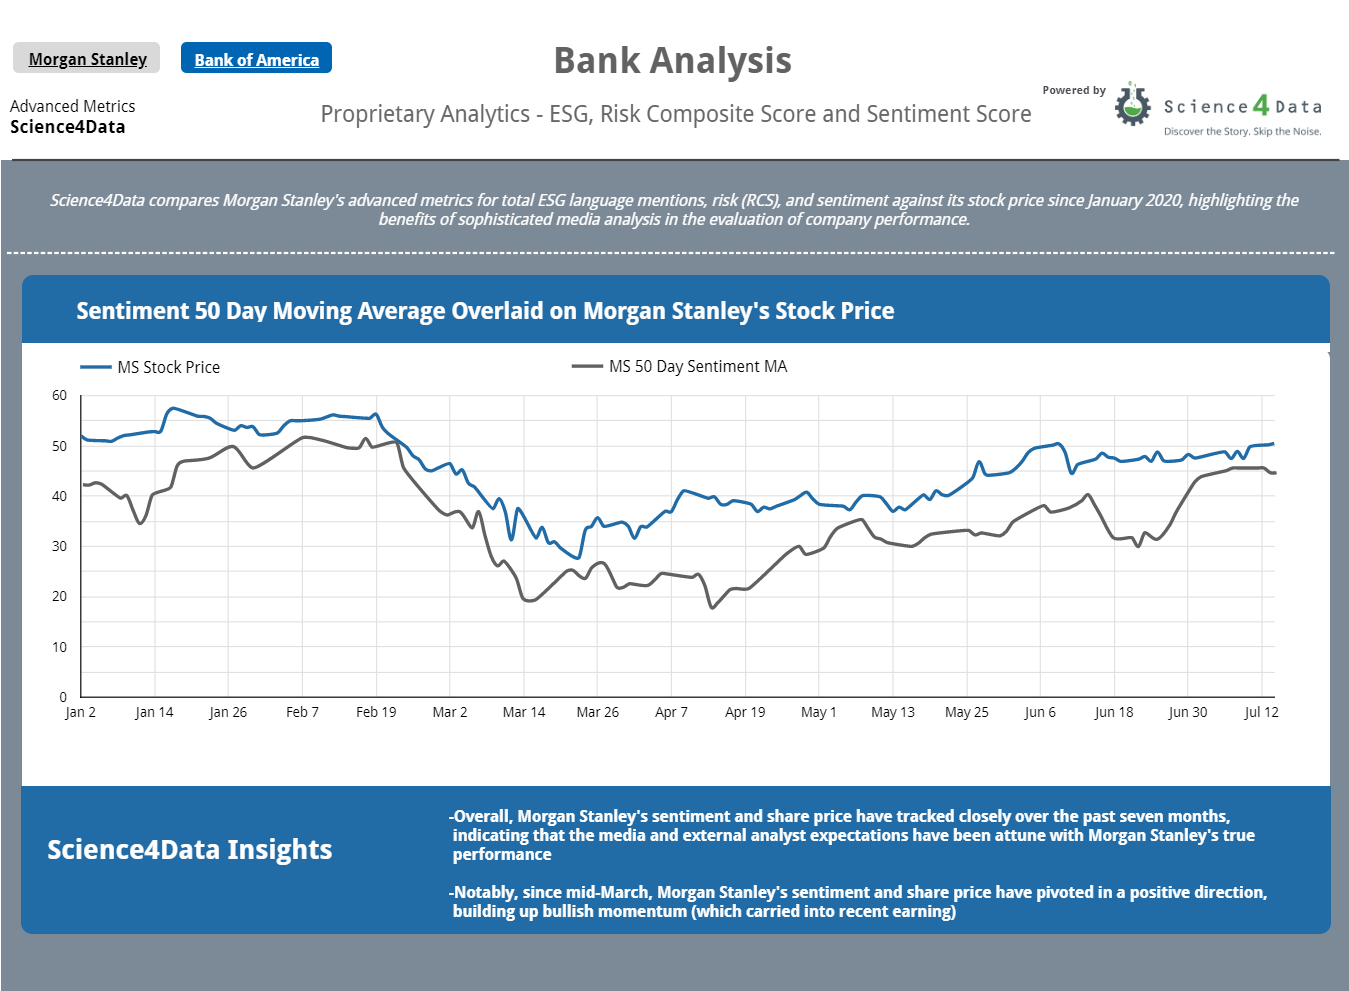 Time series analysis of sentiment vs. stock price